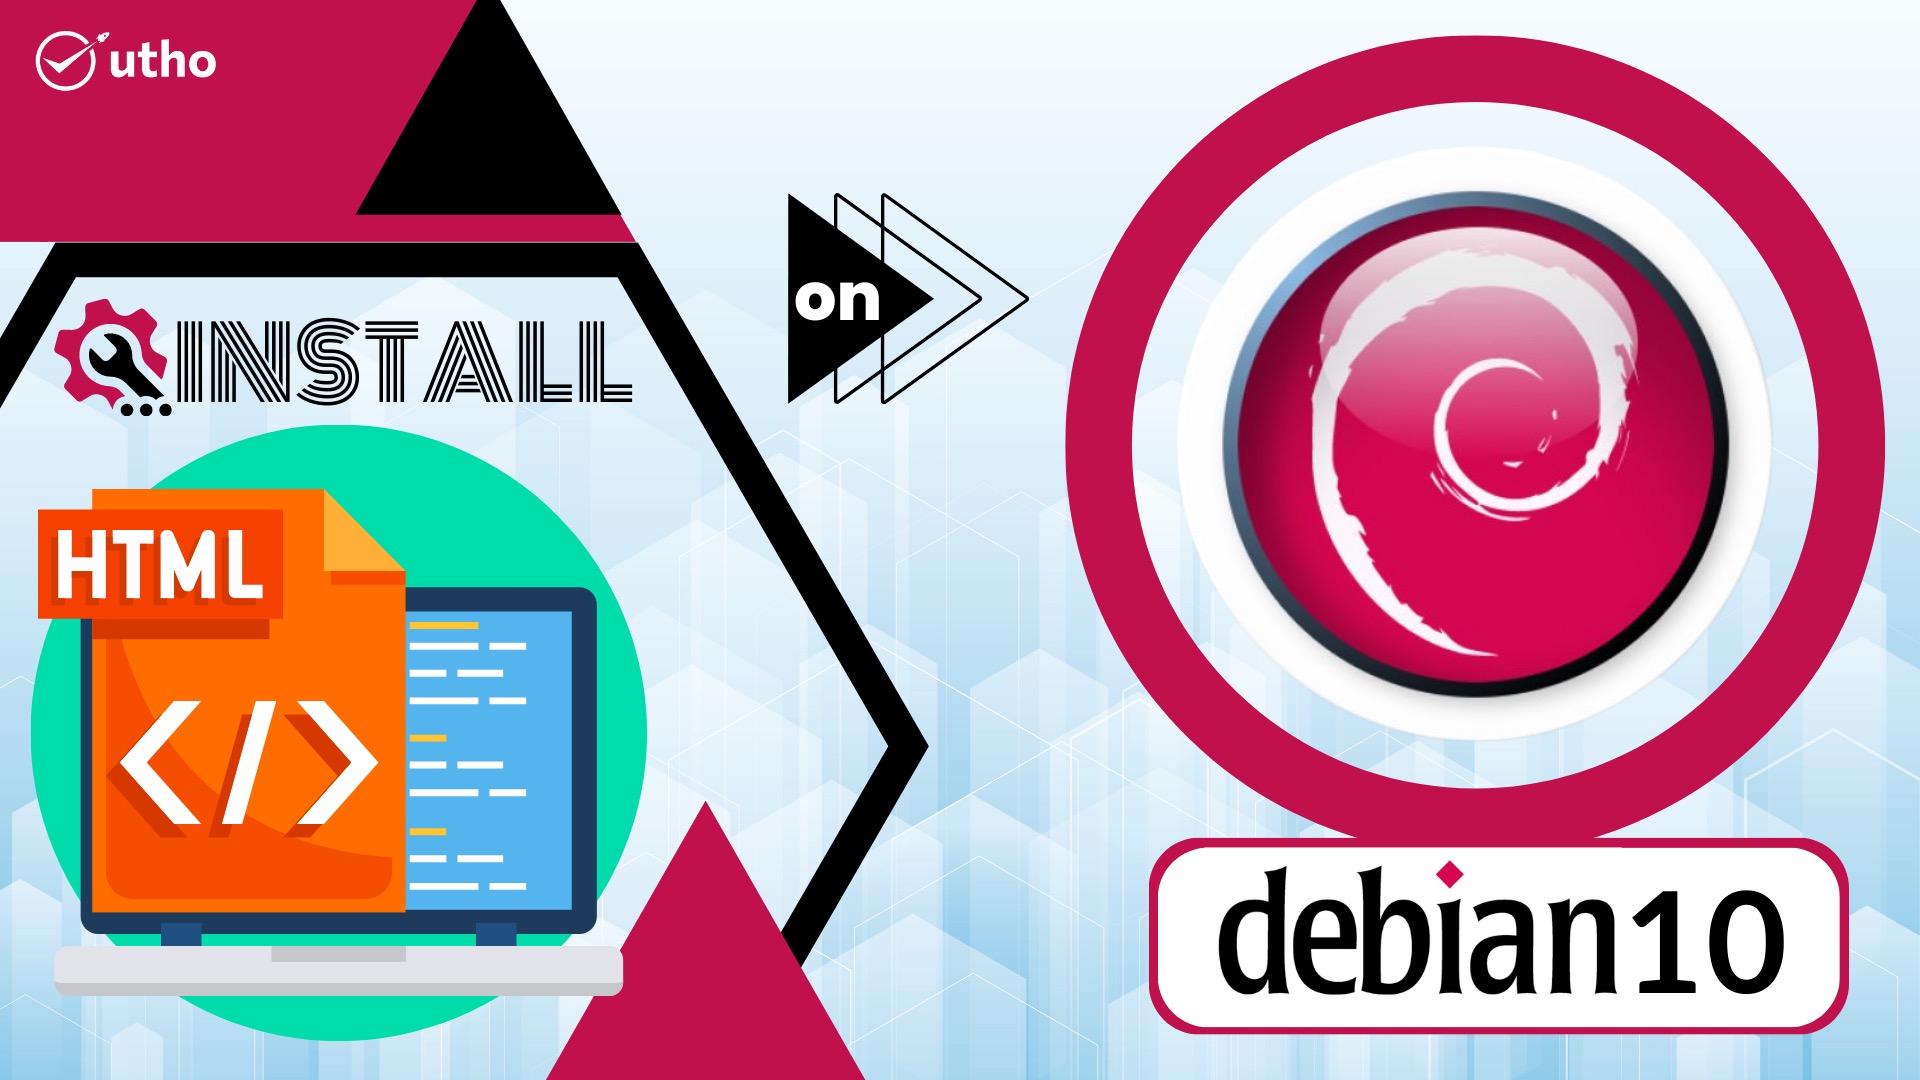 How to Install HTMLDoc on Debian 10